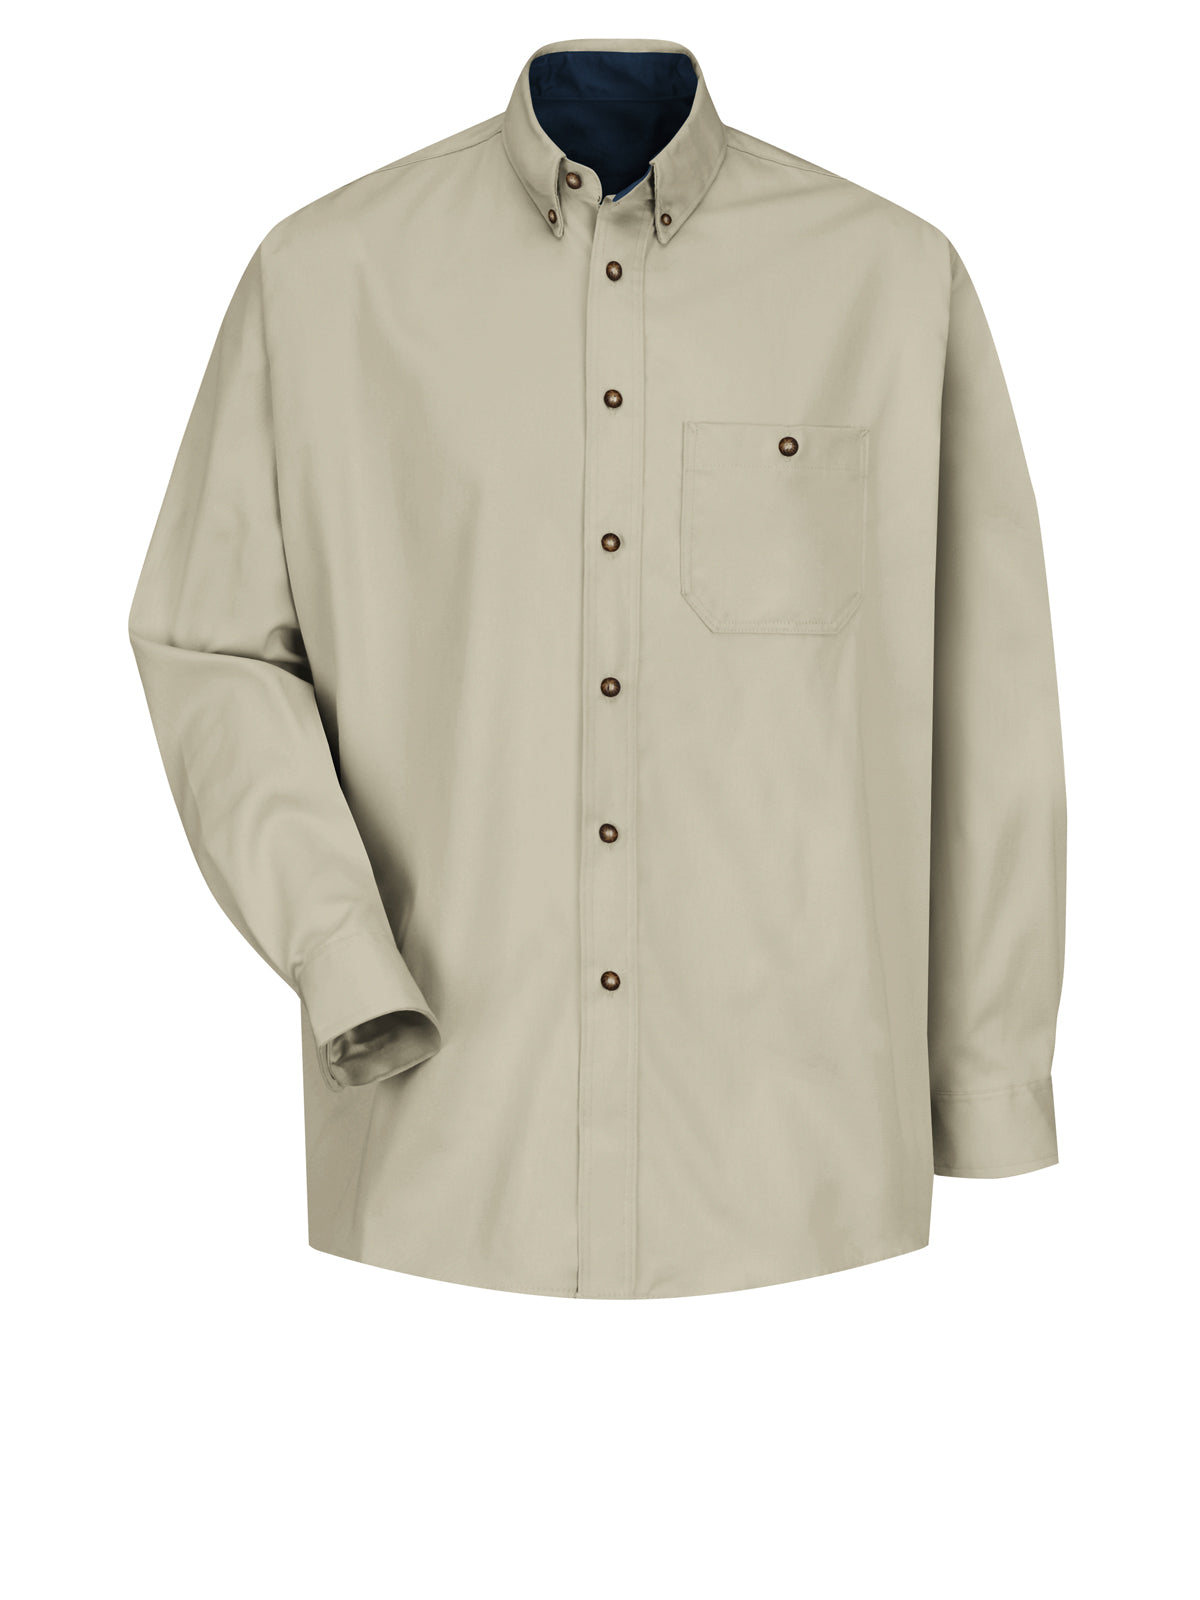 Men's Long Sleeve Cotton Contrast Dress Shirt - SC74 - Stone/Navy